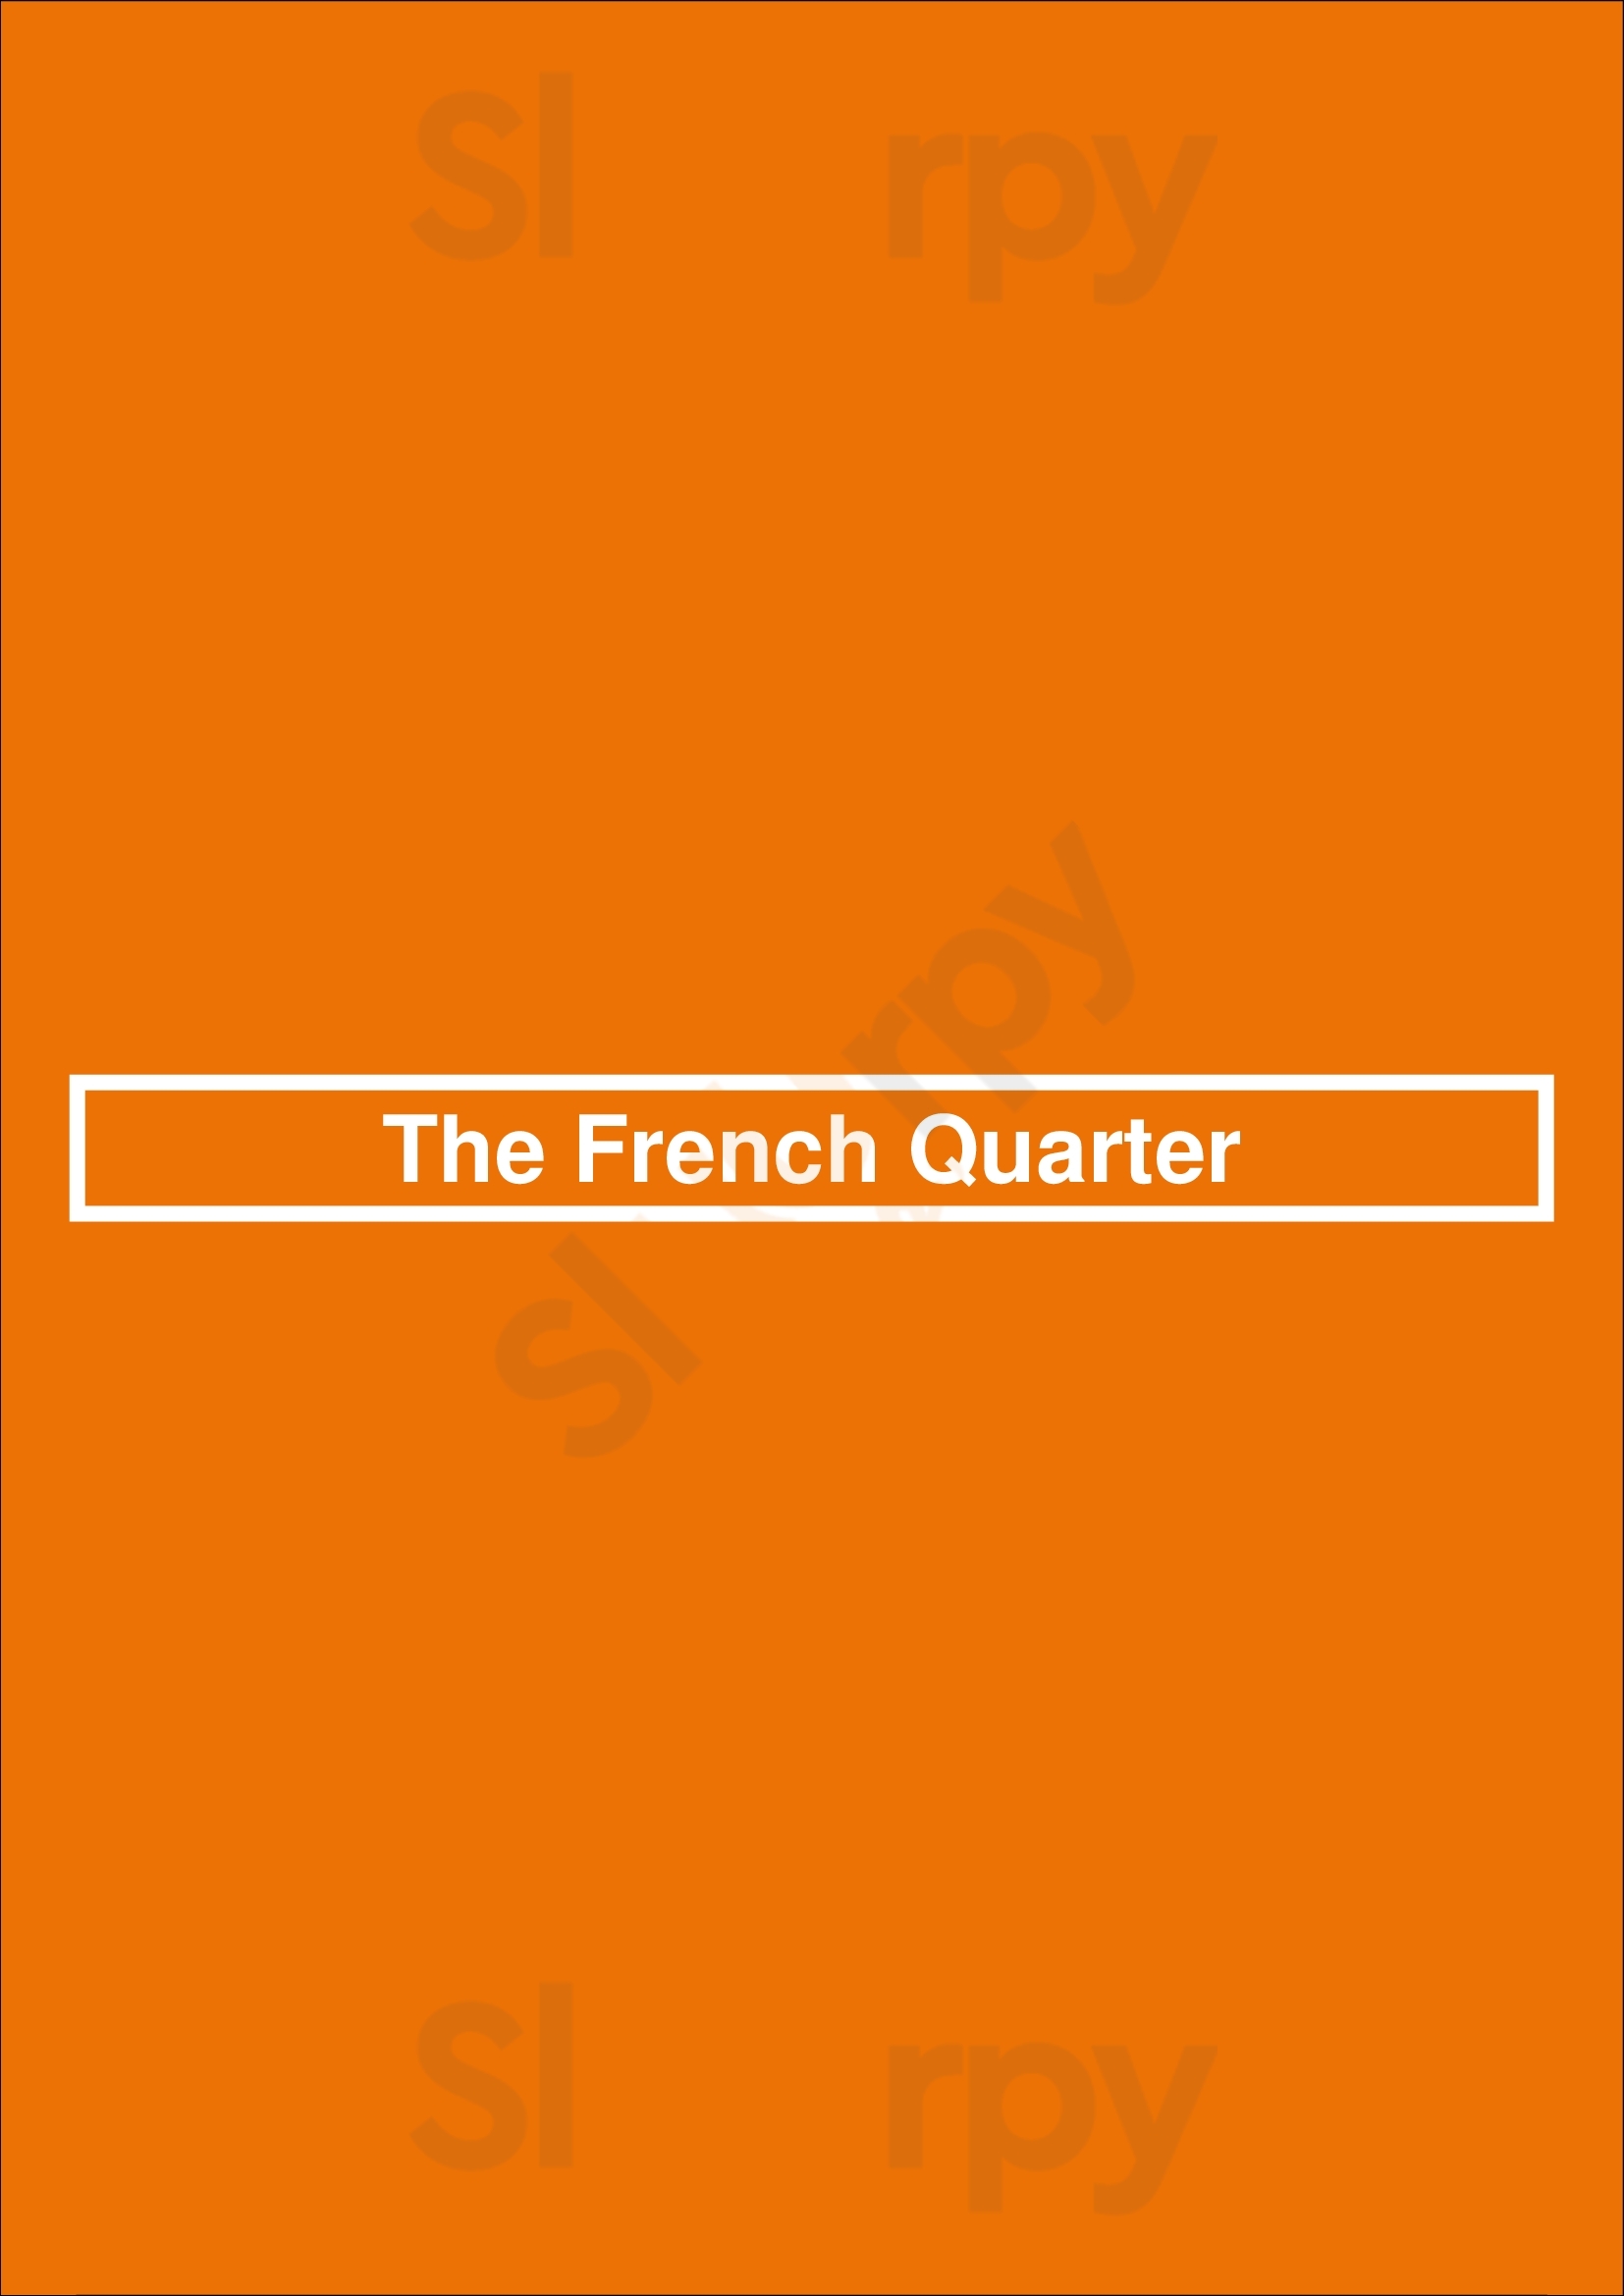 The French Quarter Rochester Menu - 1